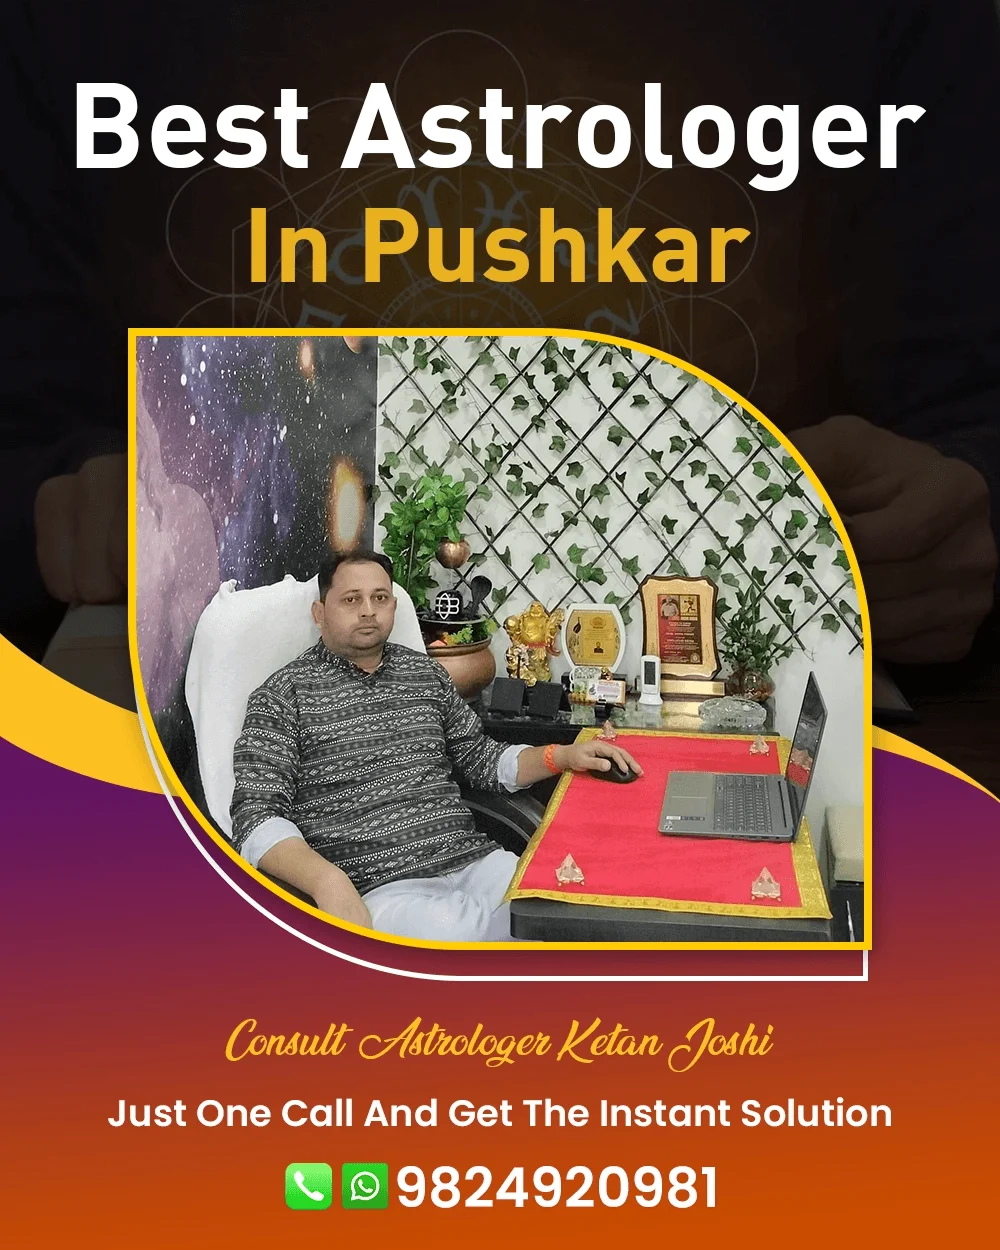 Best Astrologer In Pushkar